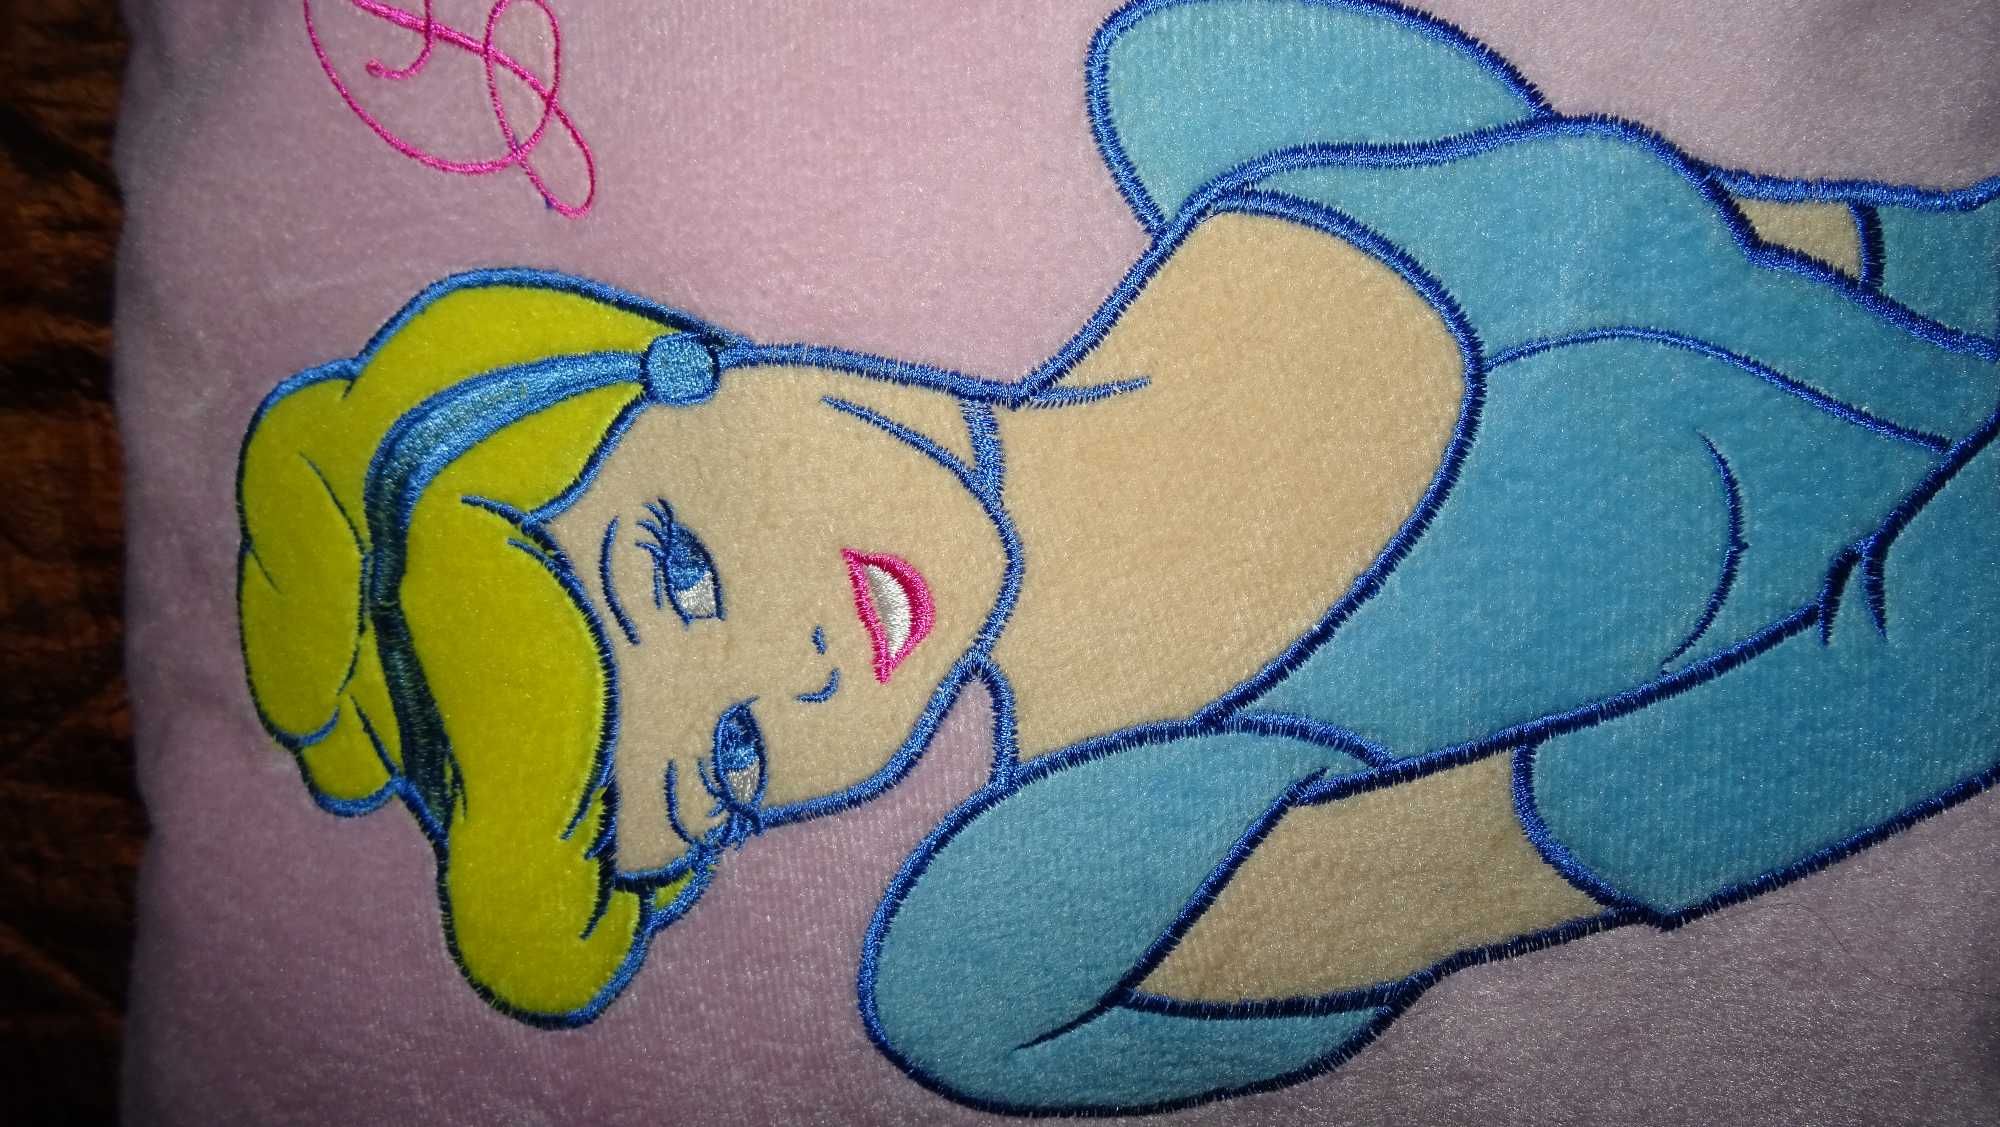 Poduszka bajkowa Kopciuszek Disney Princess